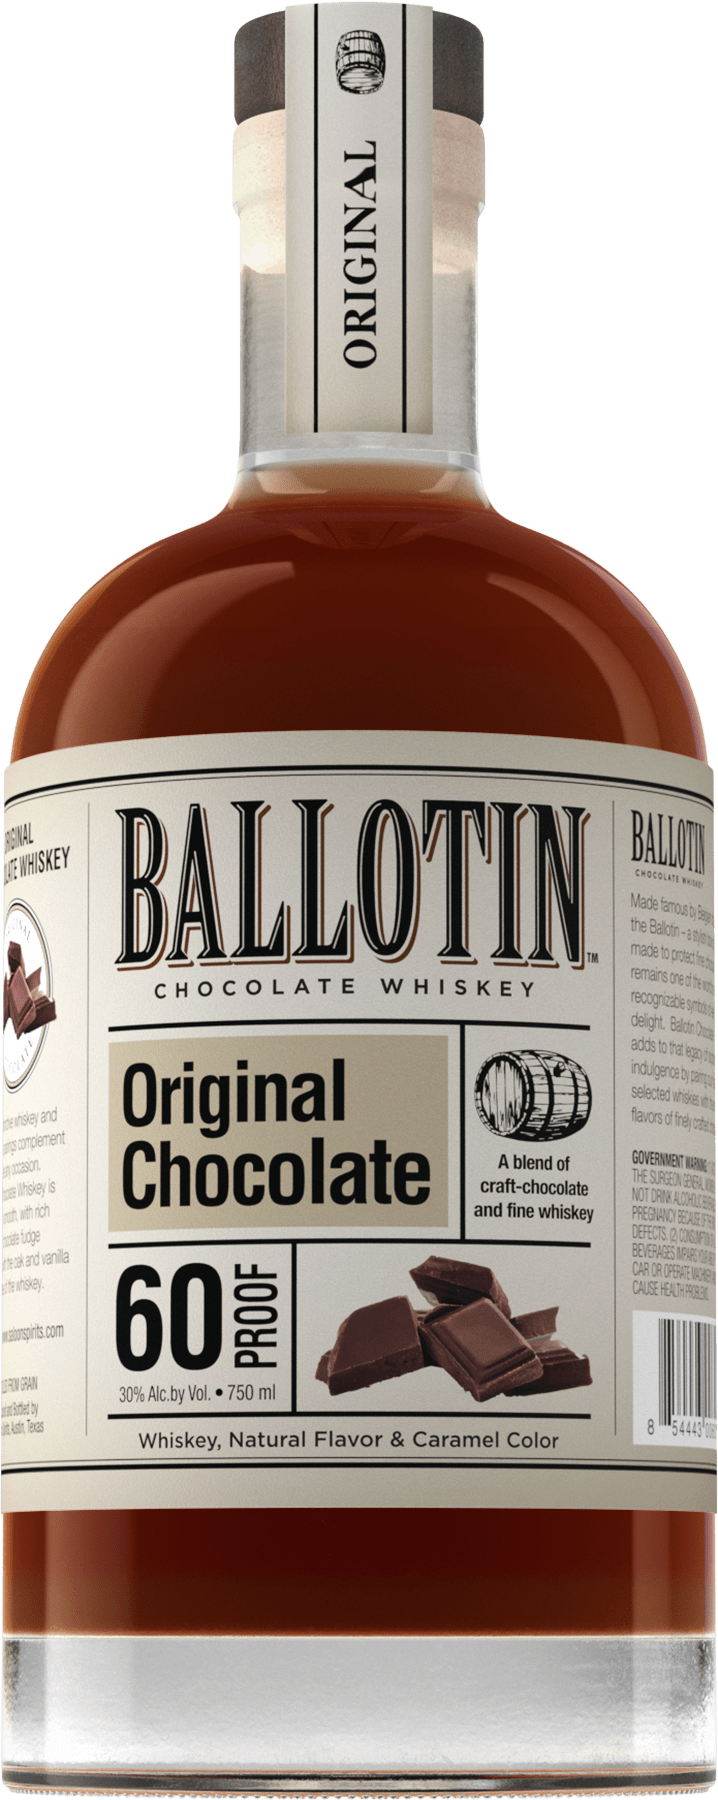 Ballotin Original Chocolate Whiskey - Barbank